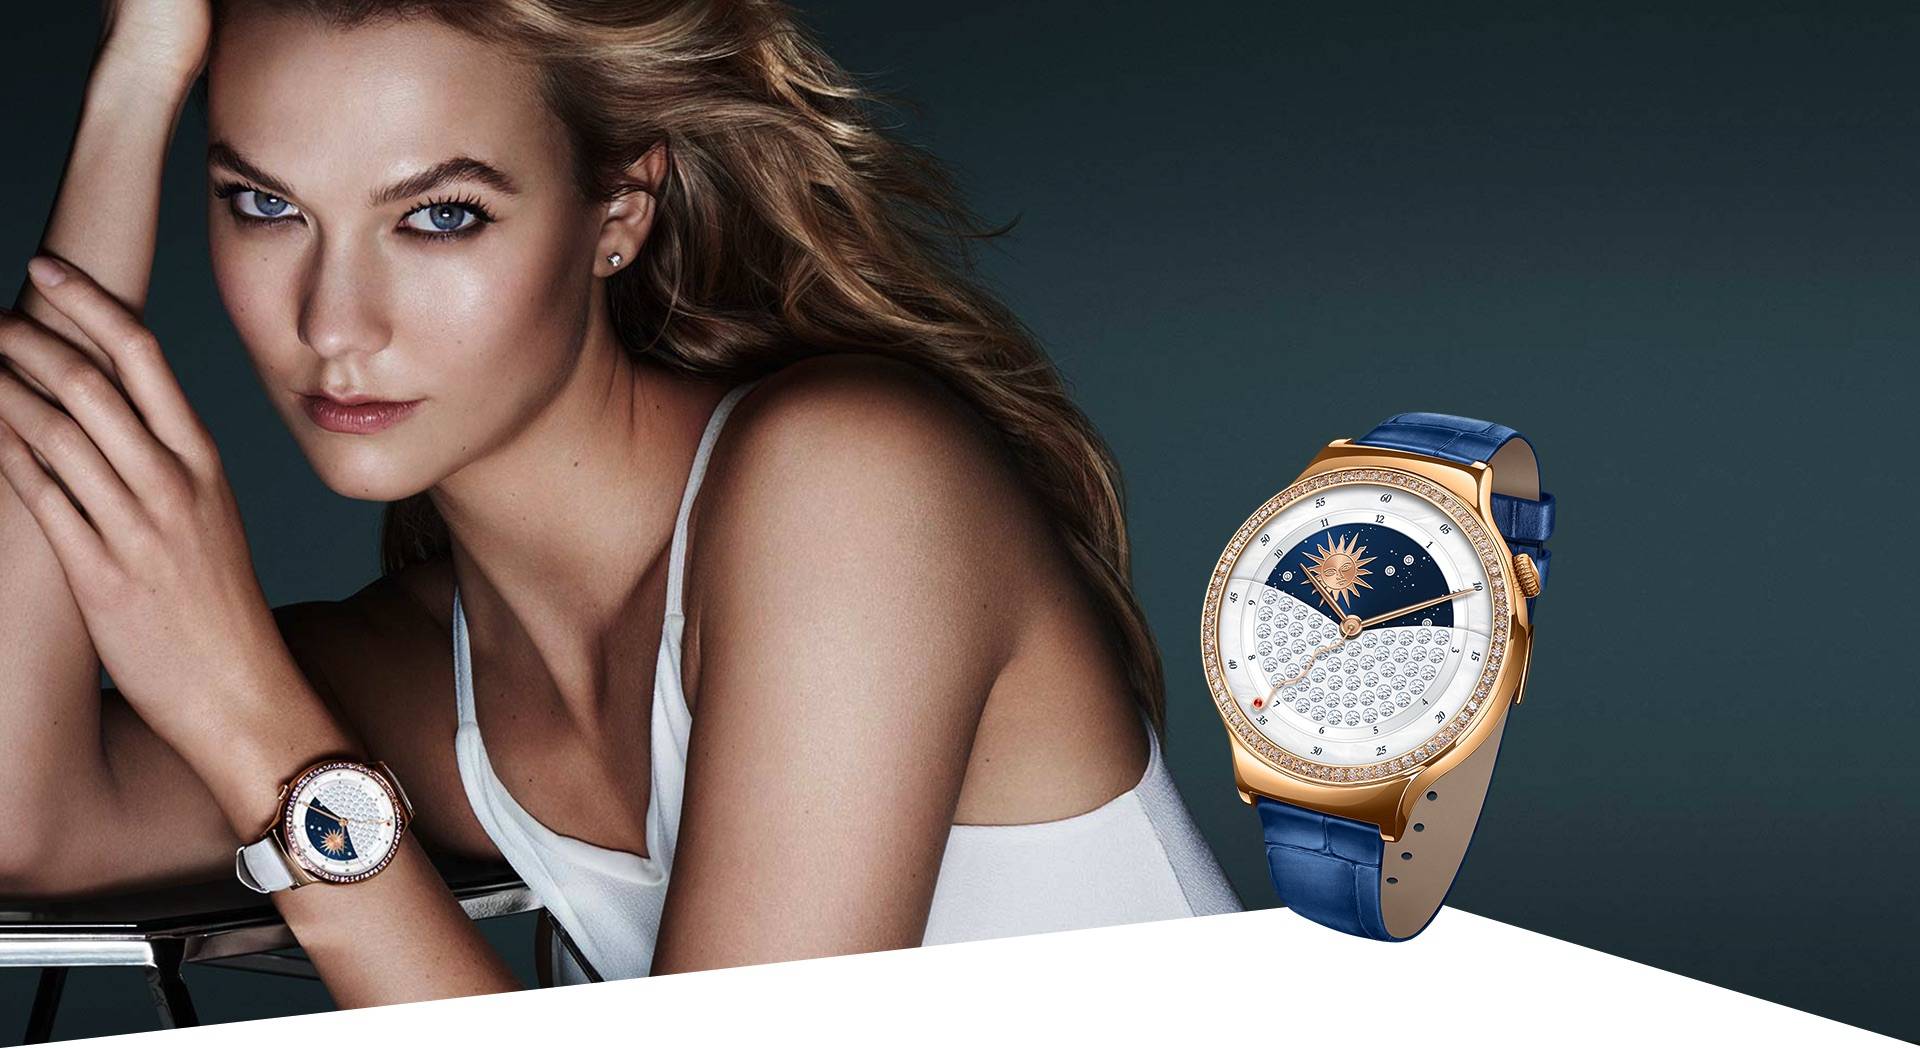 Наручные часы реклама. Смарт часы Хуавей женские. Часы Хуавей женские. Девушка с часами. Реклама женских часов.